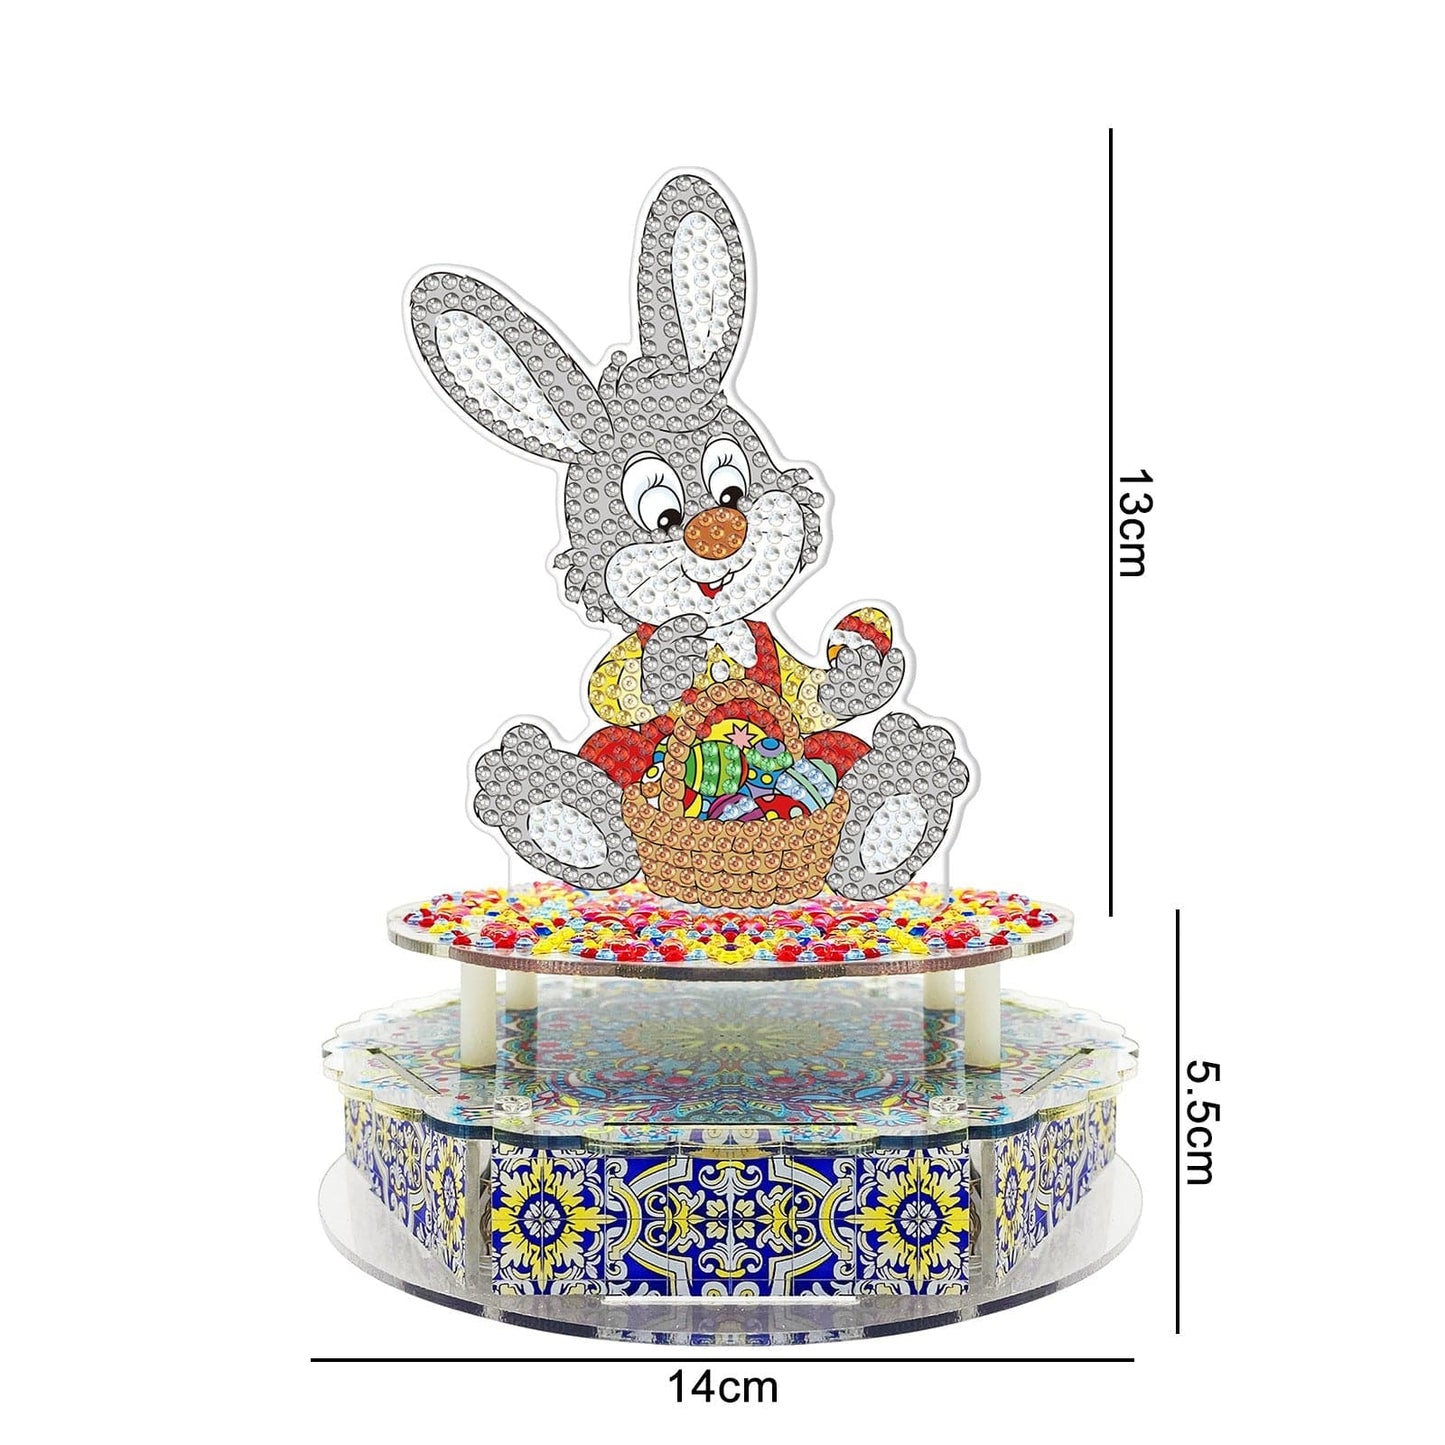 New Easter diy music box diamond painting - hand-drilled rabbit eggs ktclubs.com